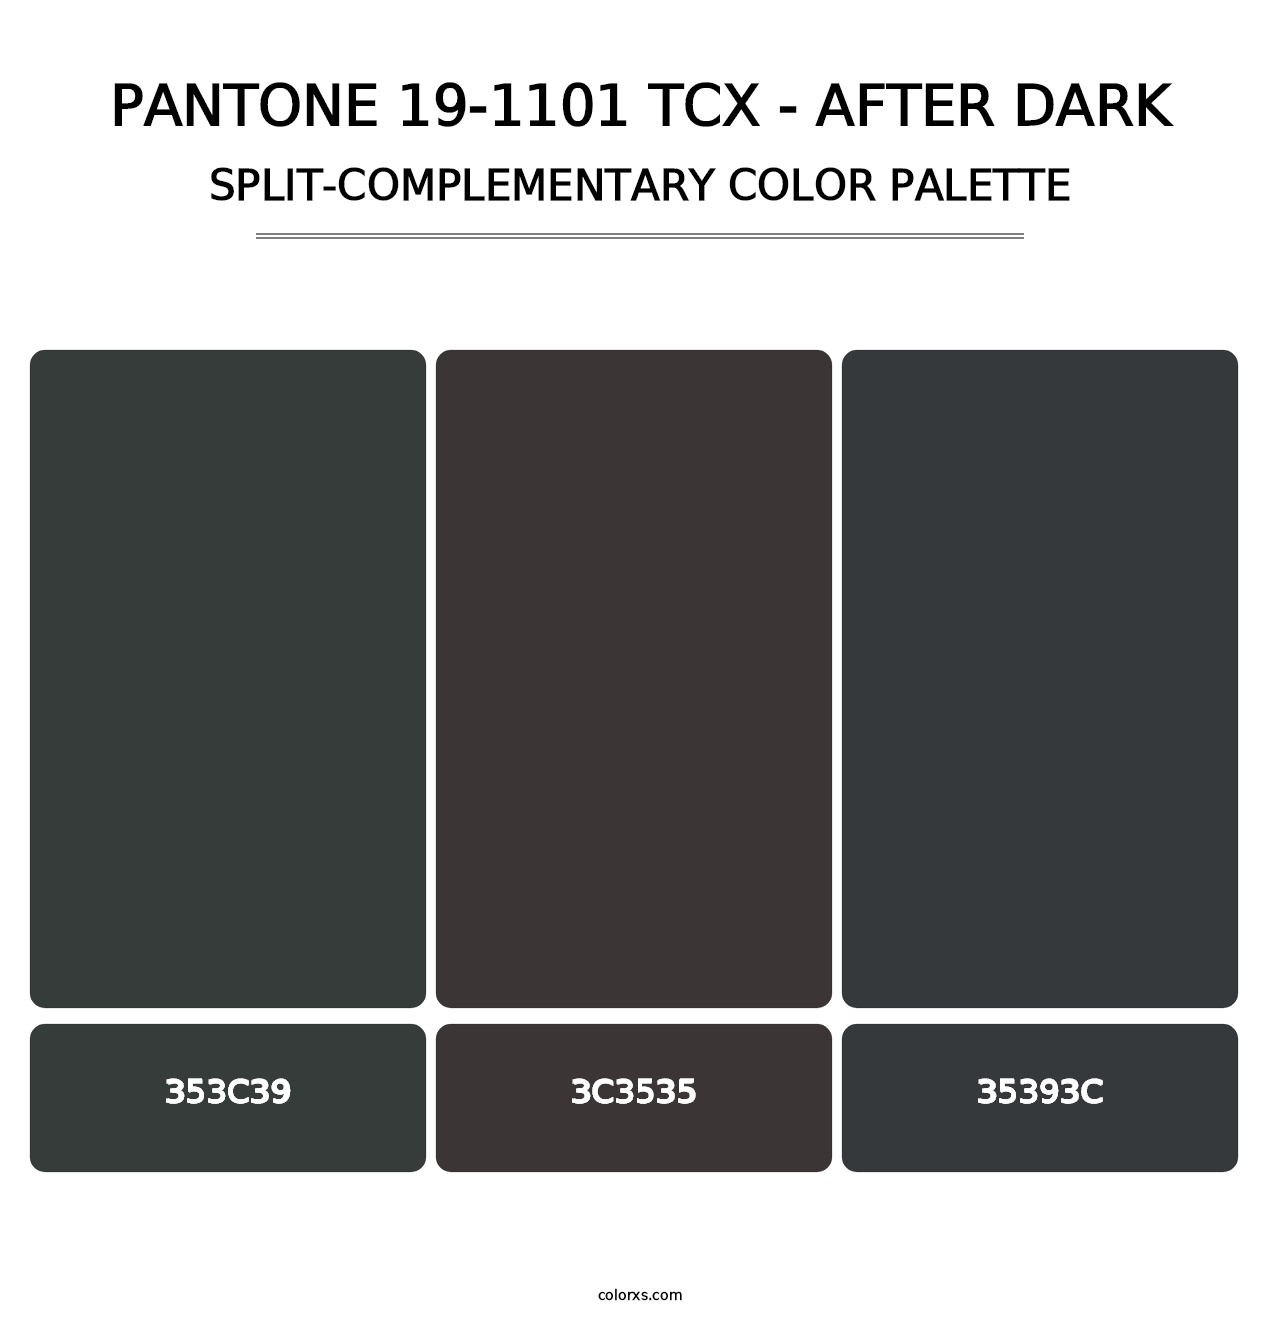 PANTONE 19-1101 TCX - After Dark - Split-Complementary Color Palette